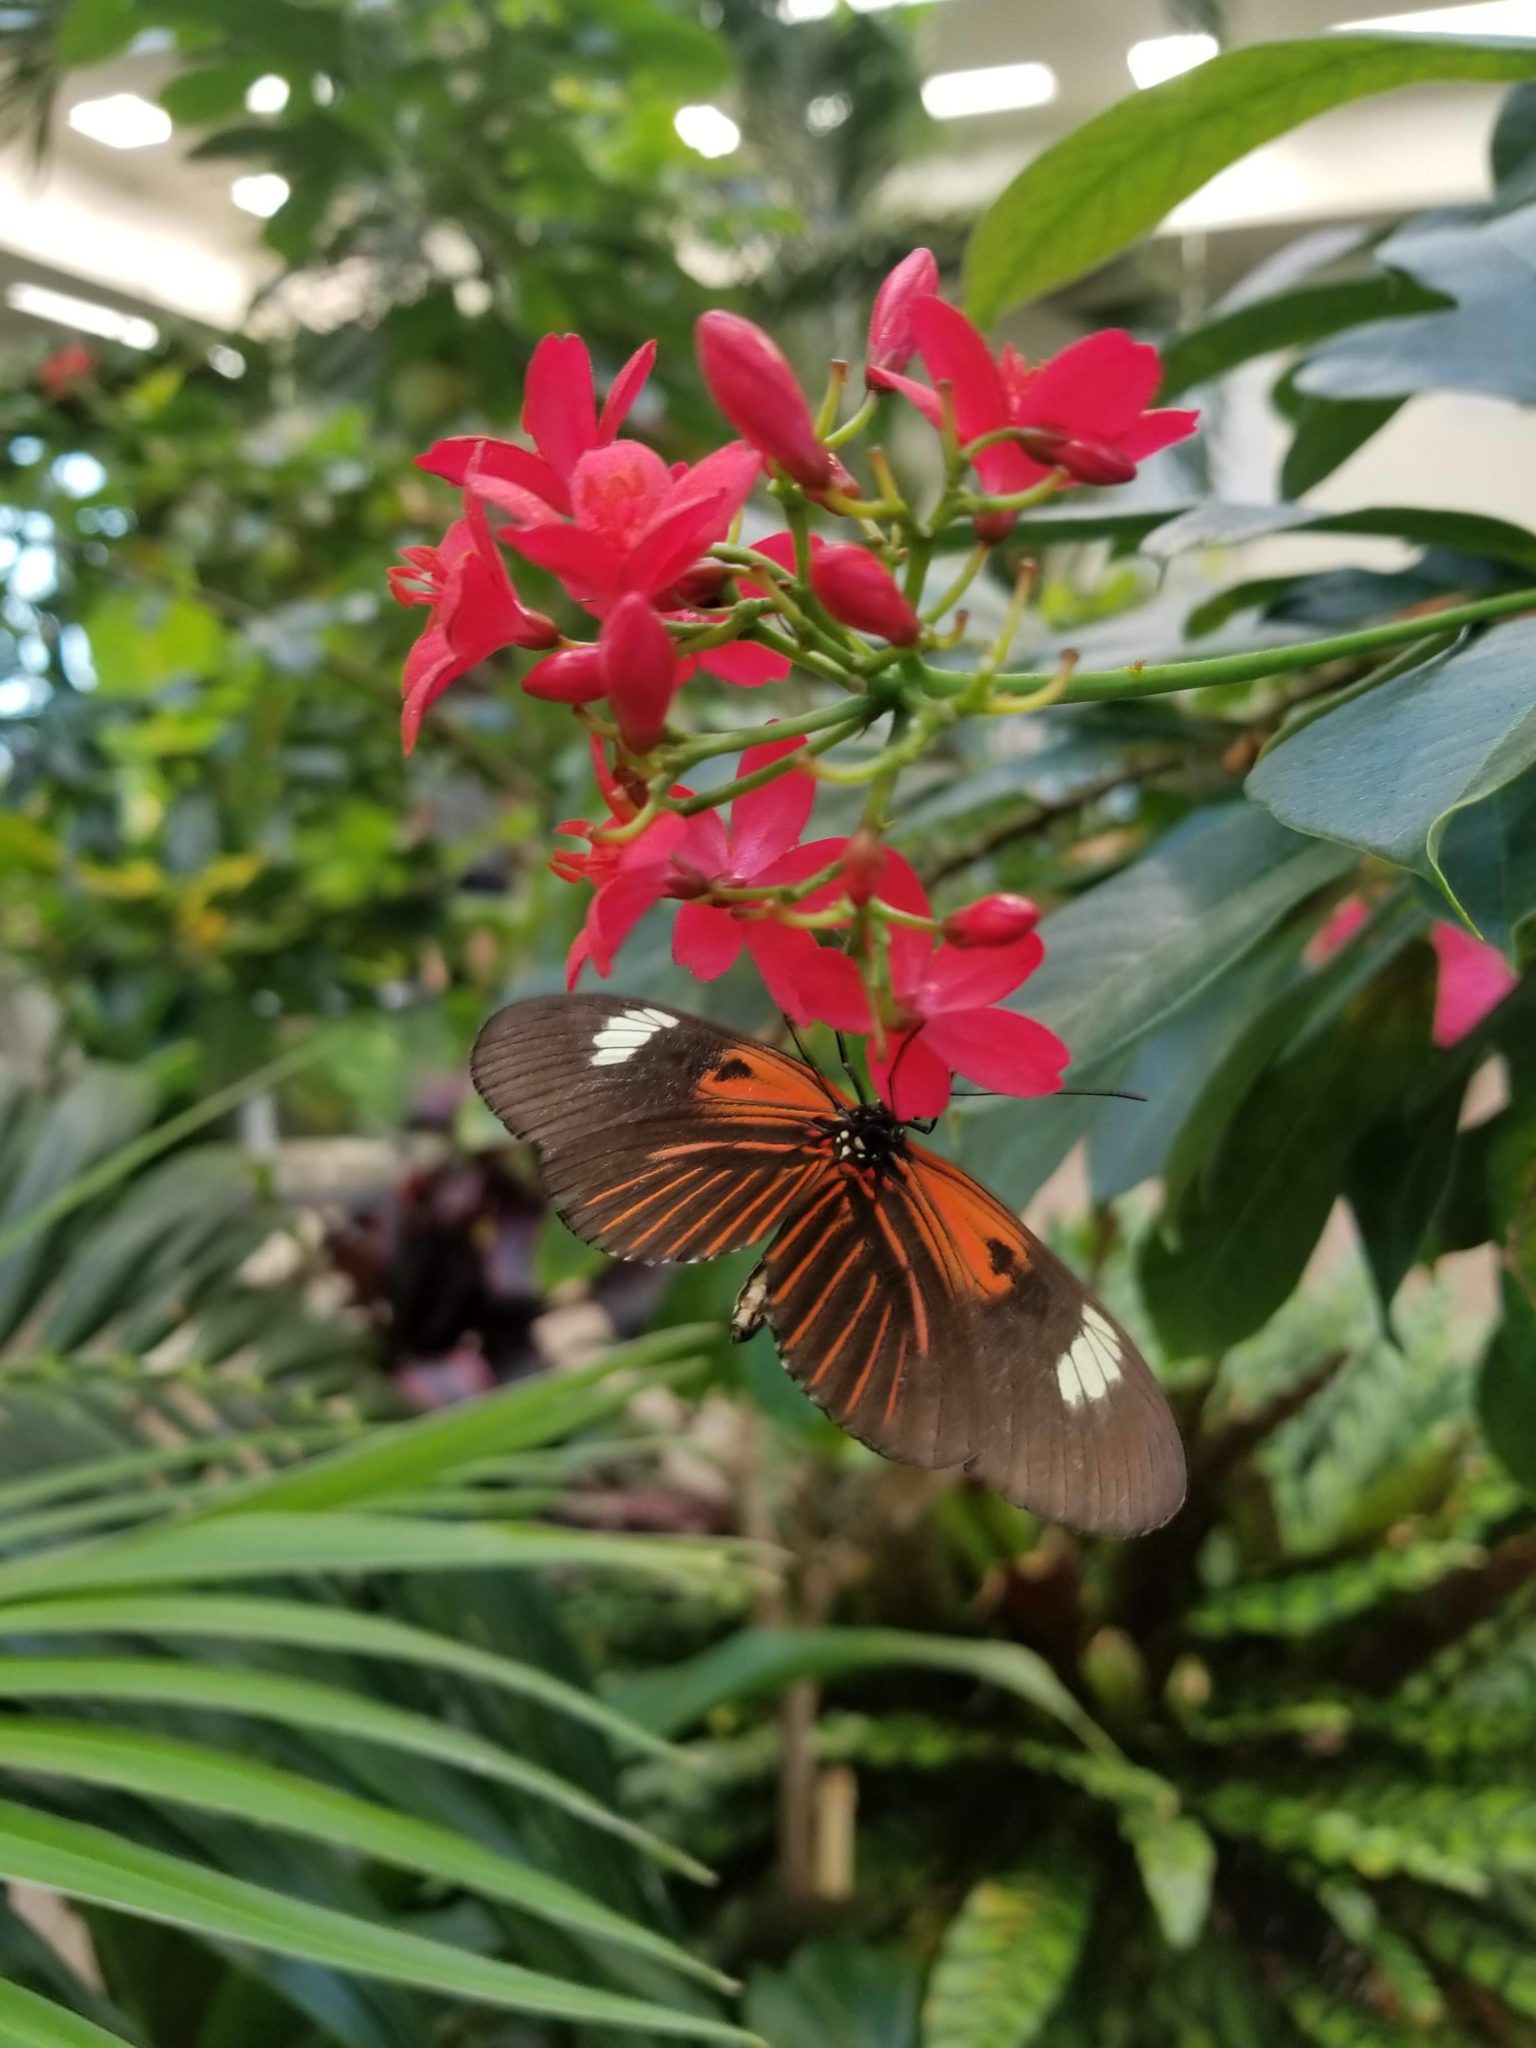 Hershey Gardens Butterfly Atrium